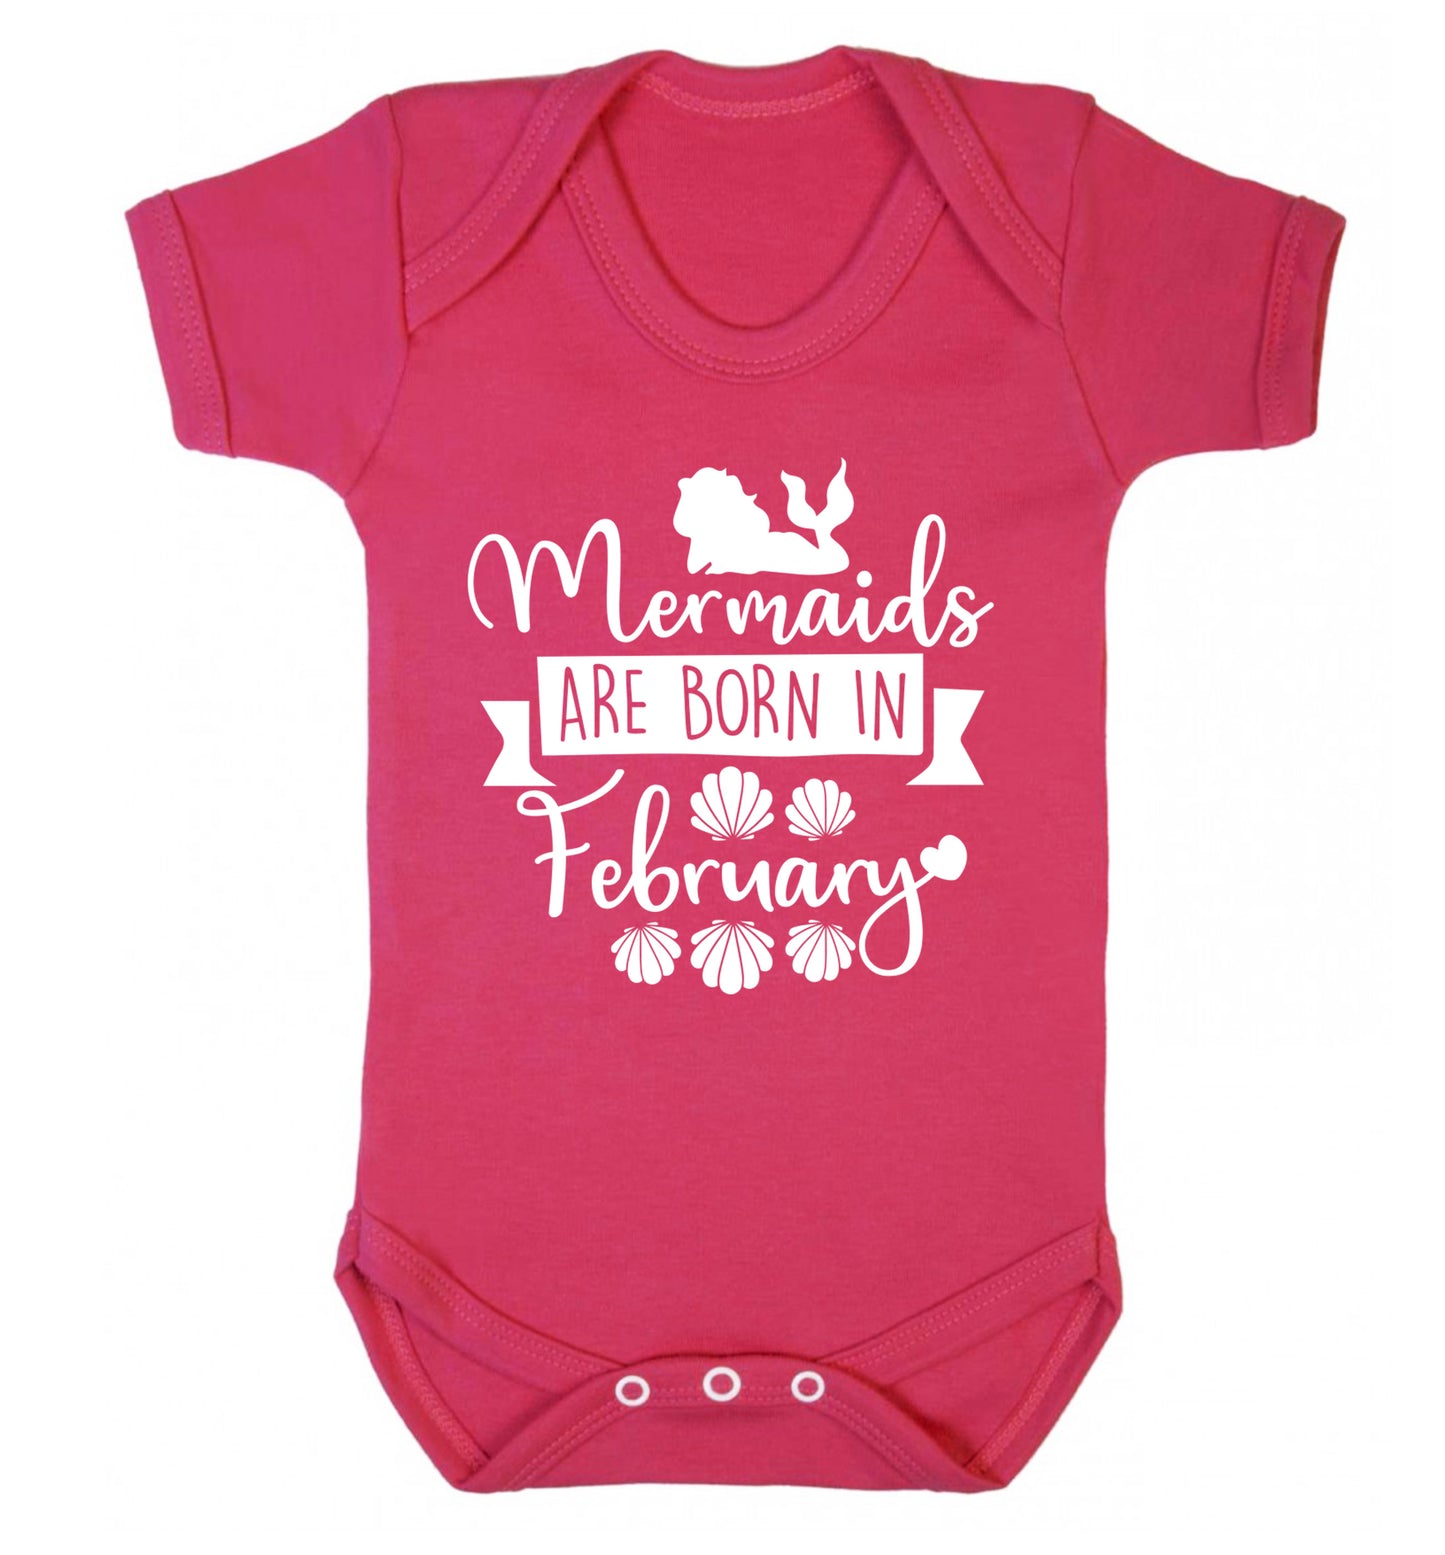 Mermaids are born in February Baby Vest dark pink 18-24 months